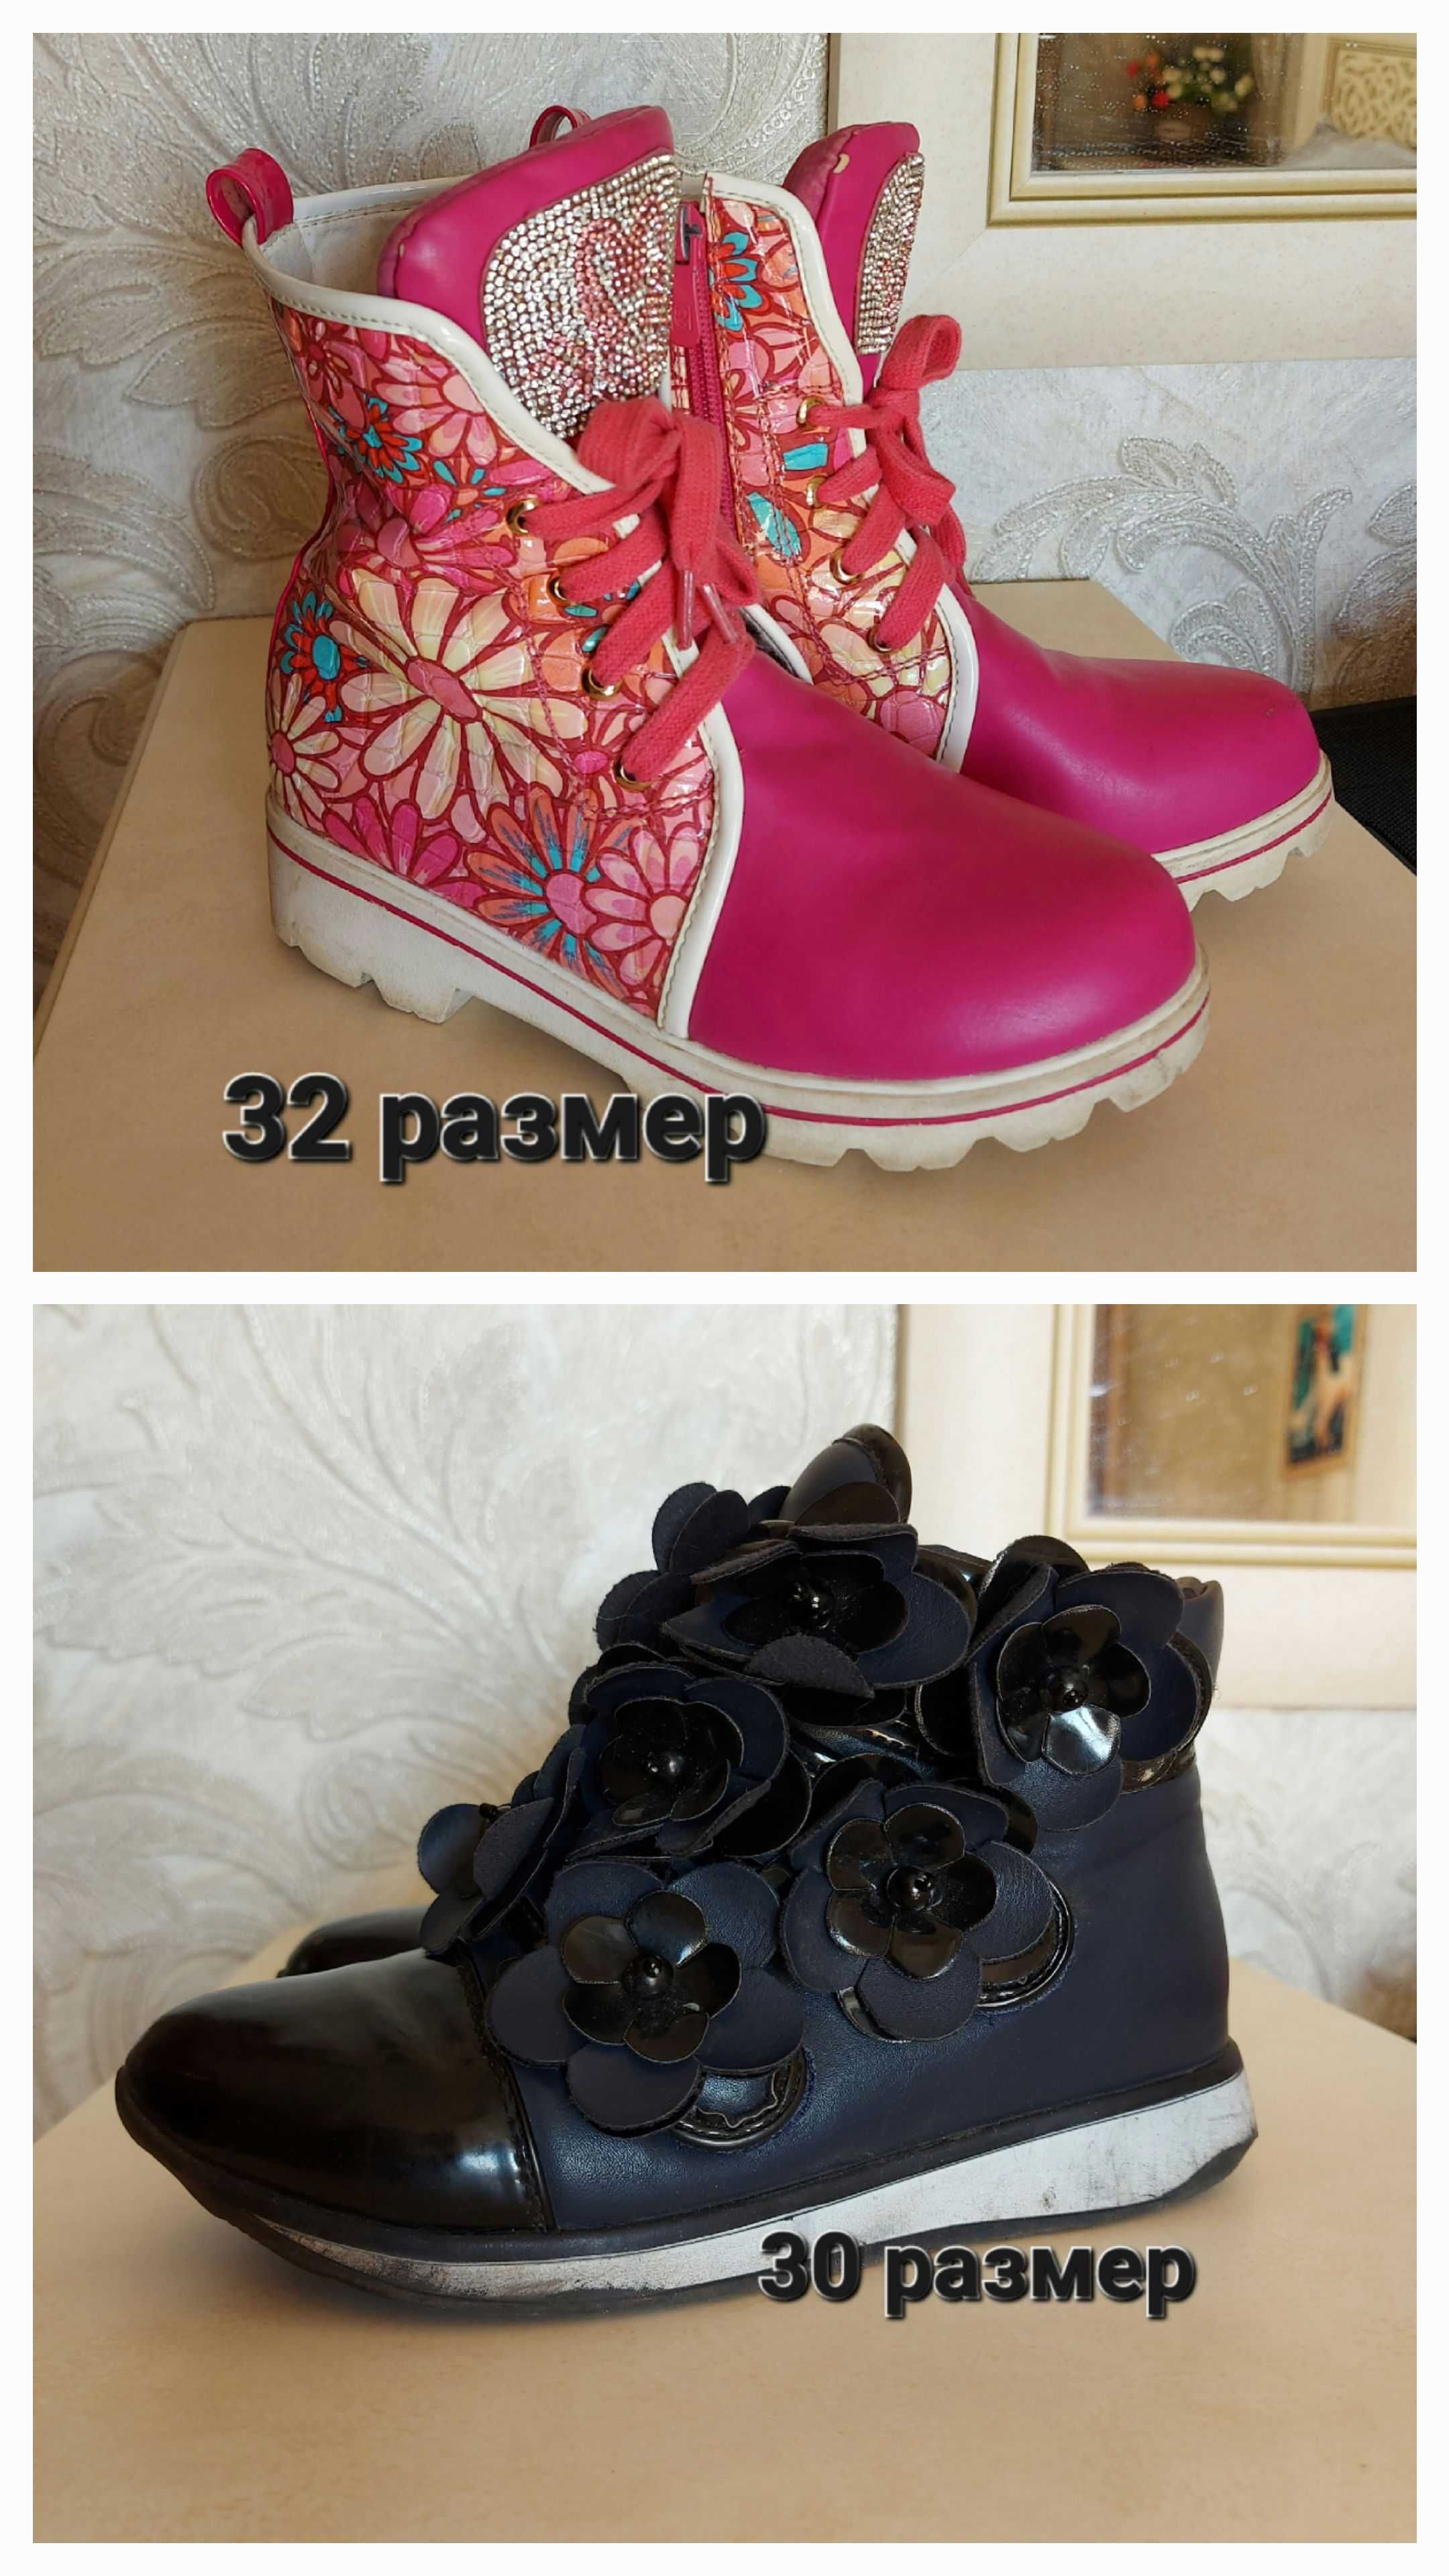 Детские демисезонные сапоги,ботинки. 30 и 32 размер.